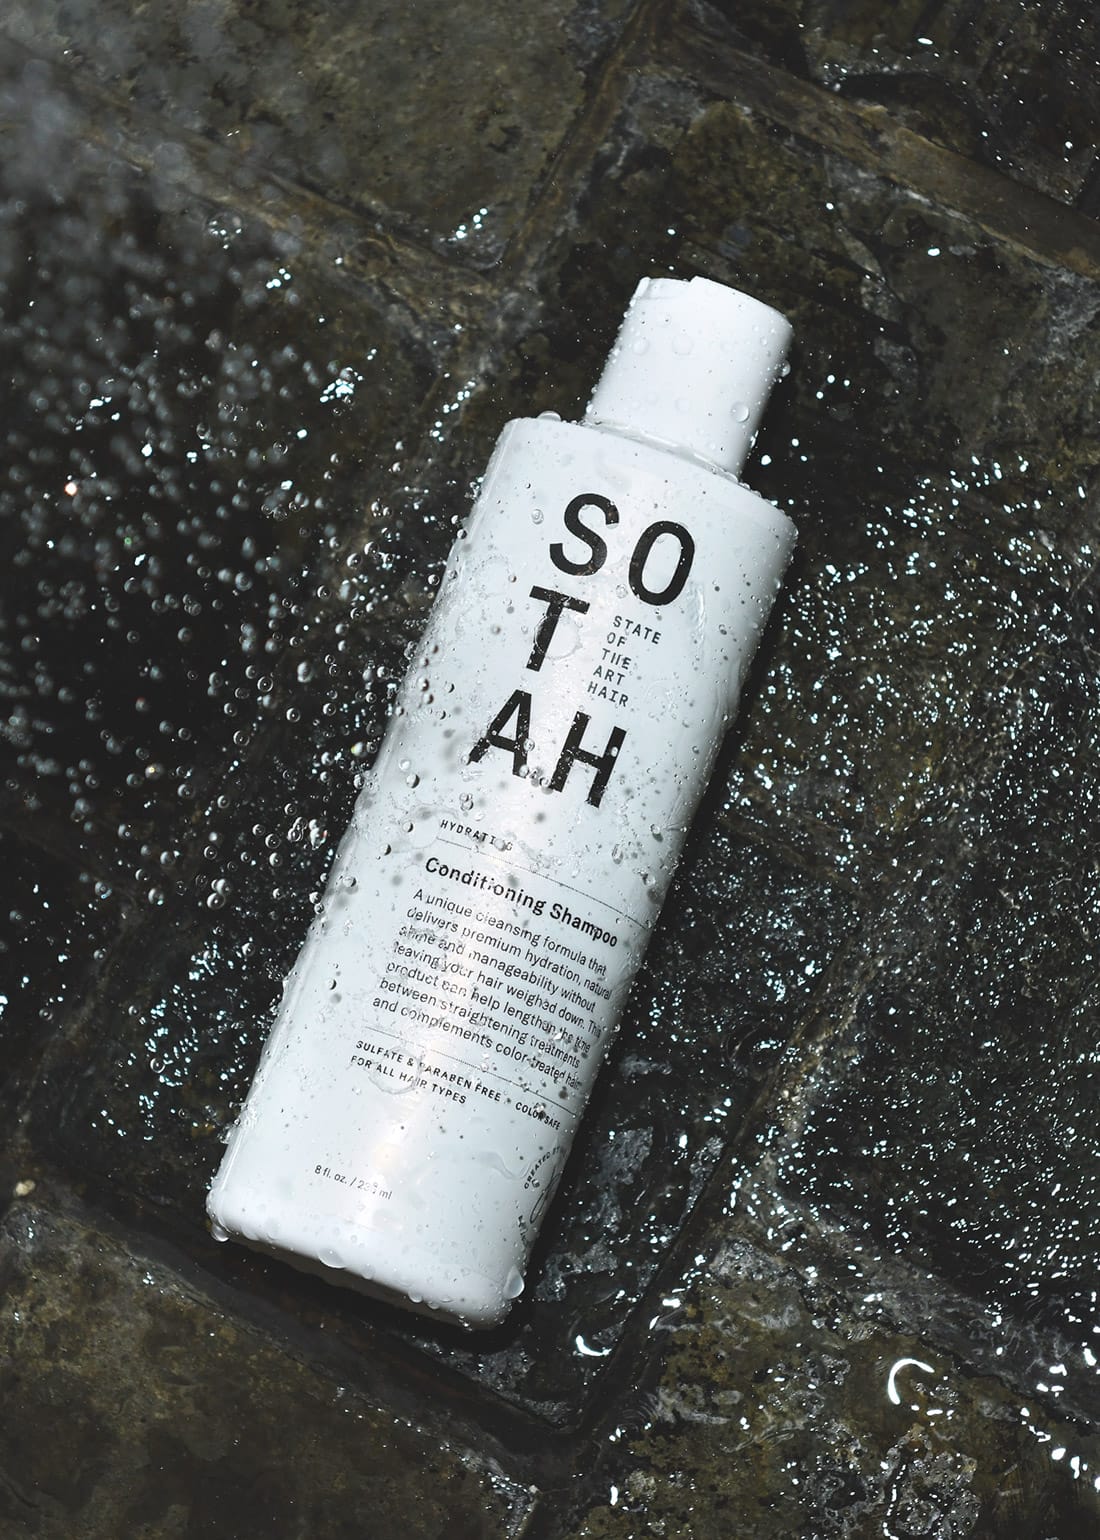 SOTAH Conditioning Shampoo